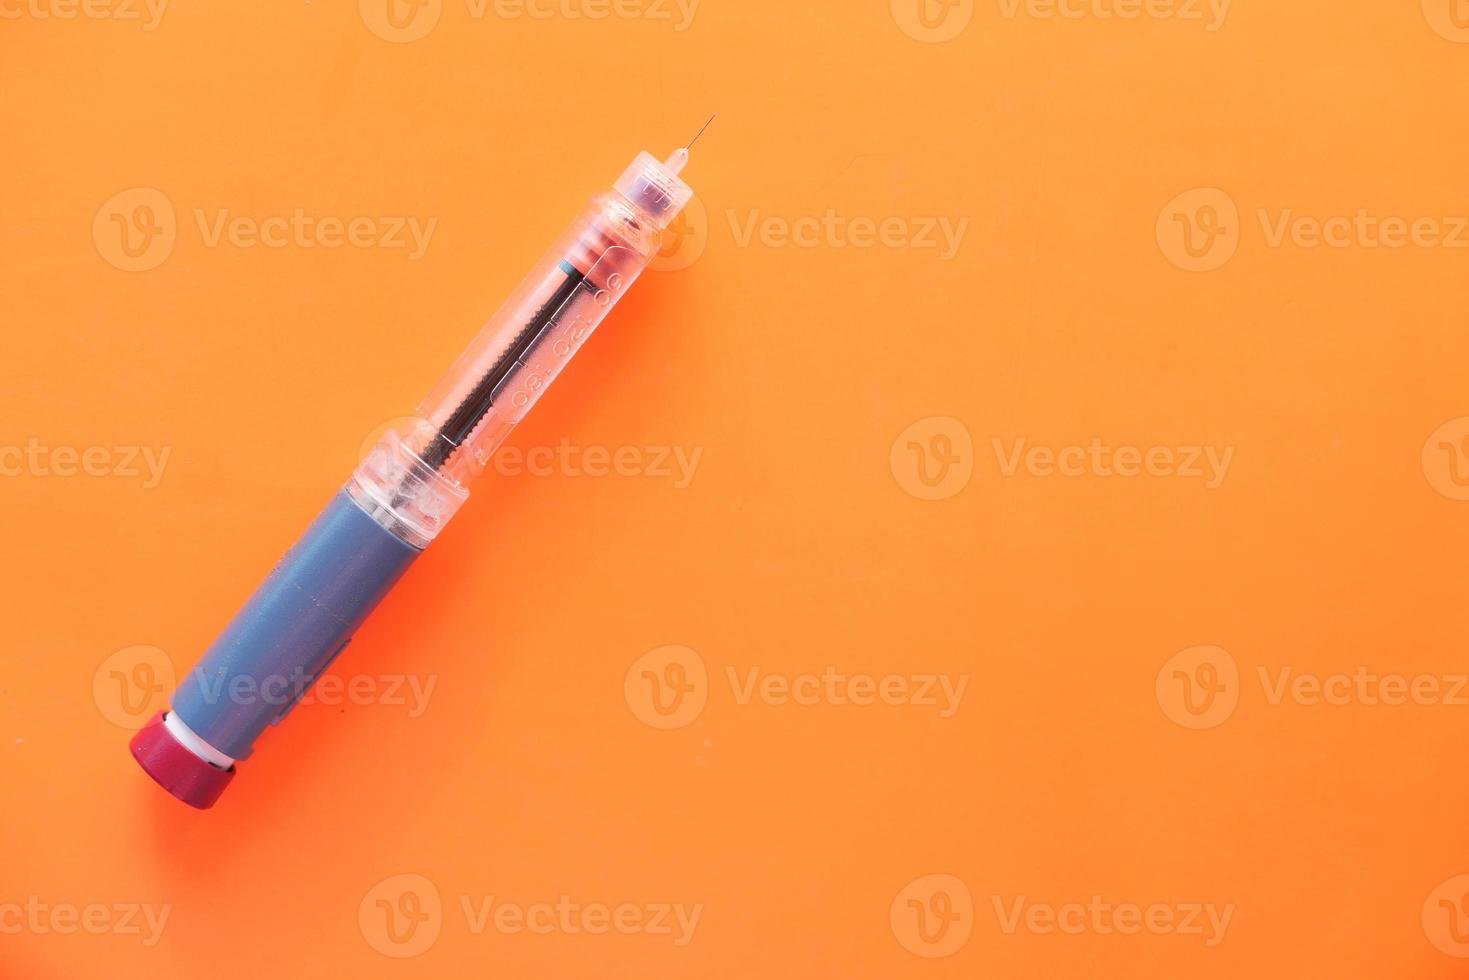 Insulin pen on orange background photo